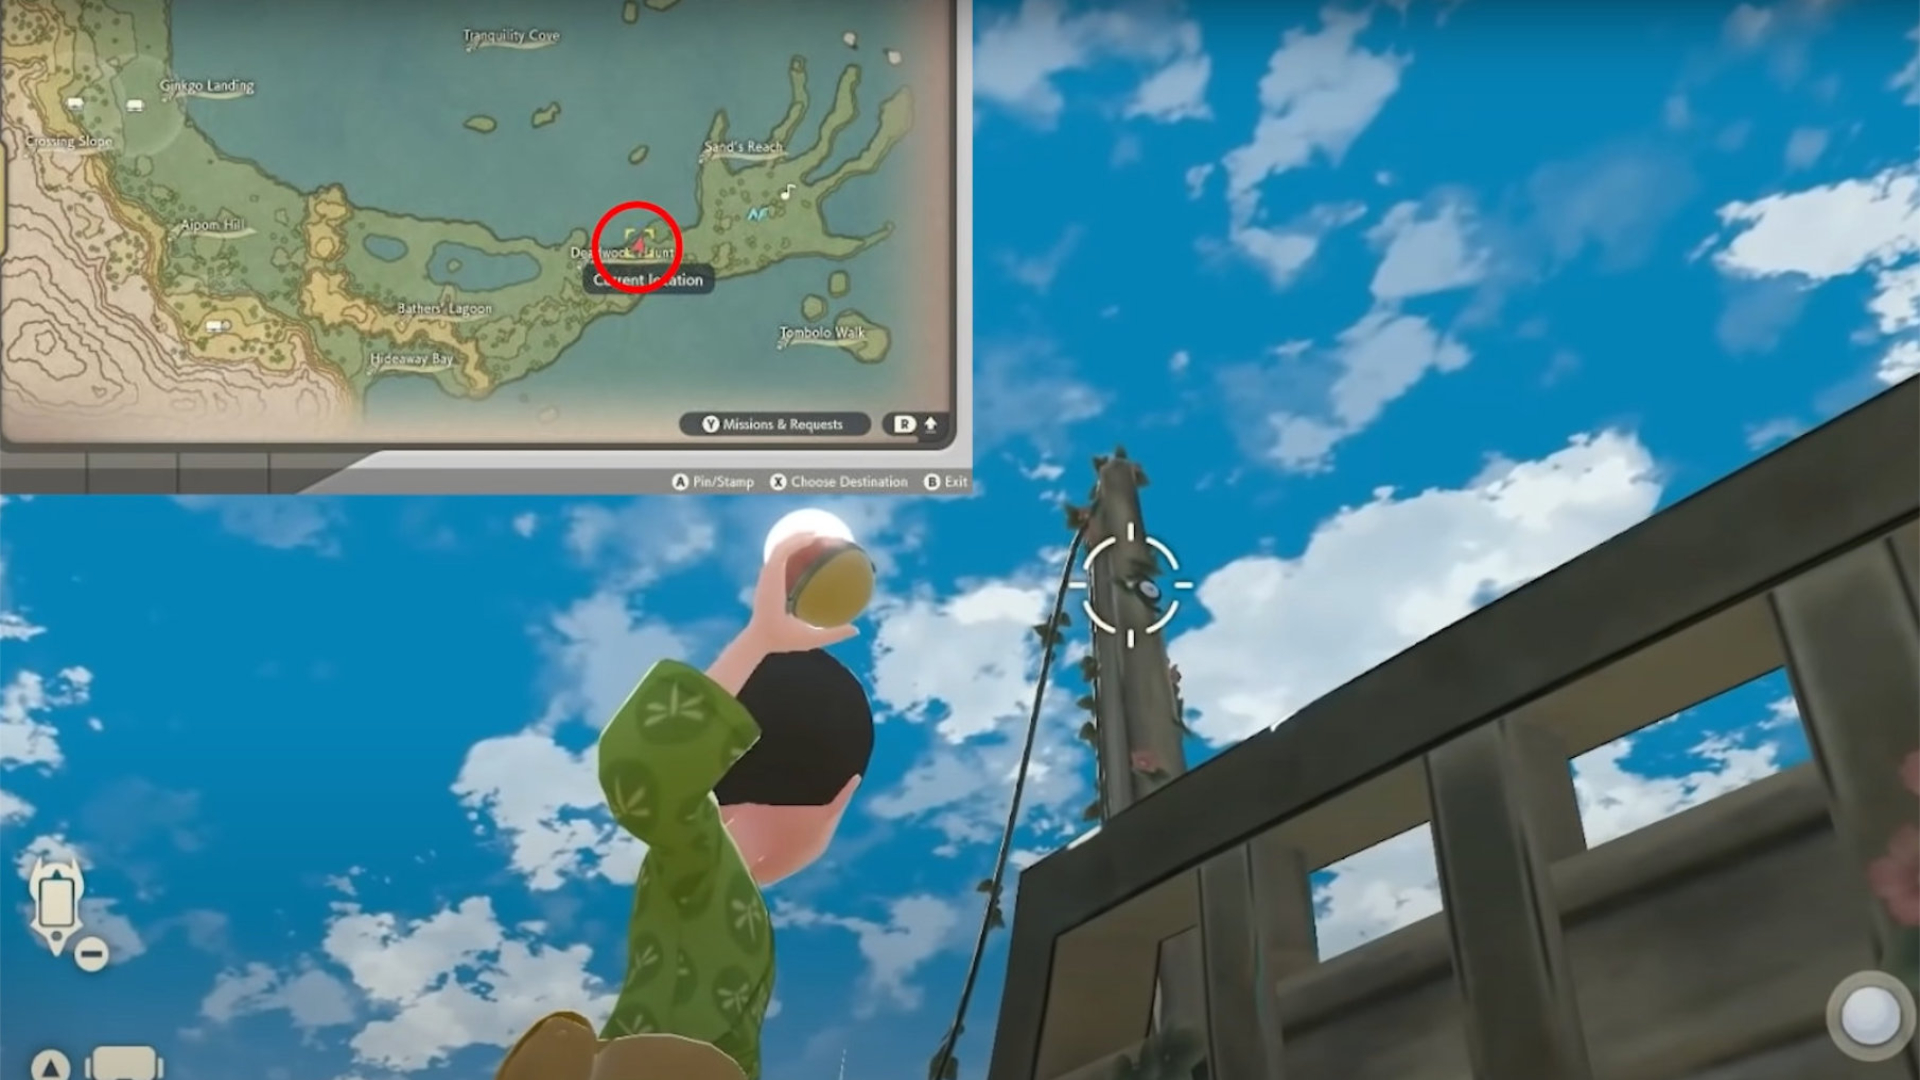 Pokémon Legend: Arceus - Onde Encontrar Todos os Unown